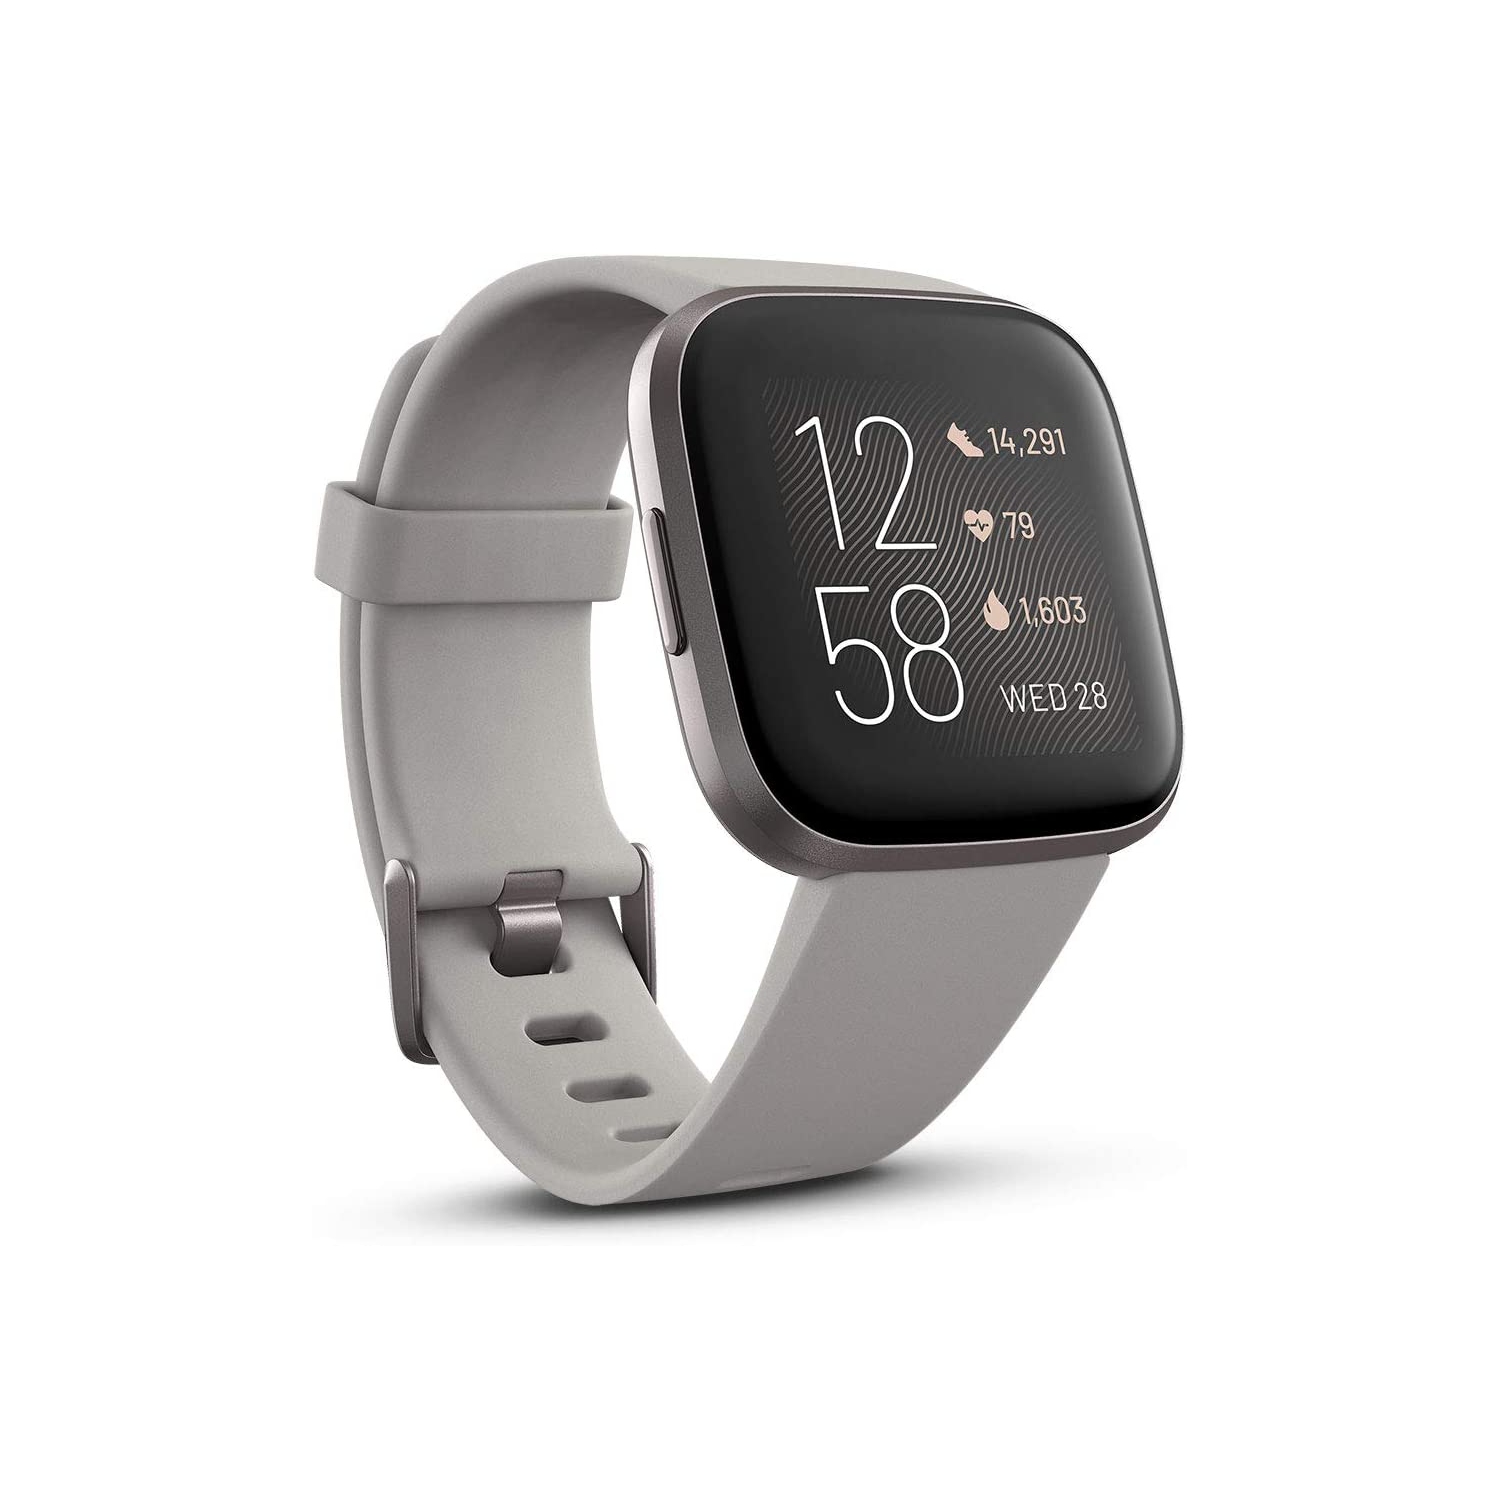 (Refurbished-Excellent) Fitbit Versa 2 Health and Fitness Smartwatch - Stone/mist Grey